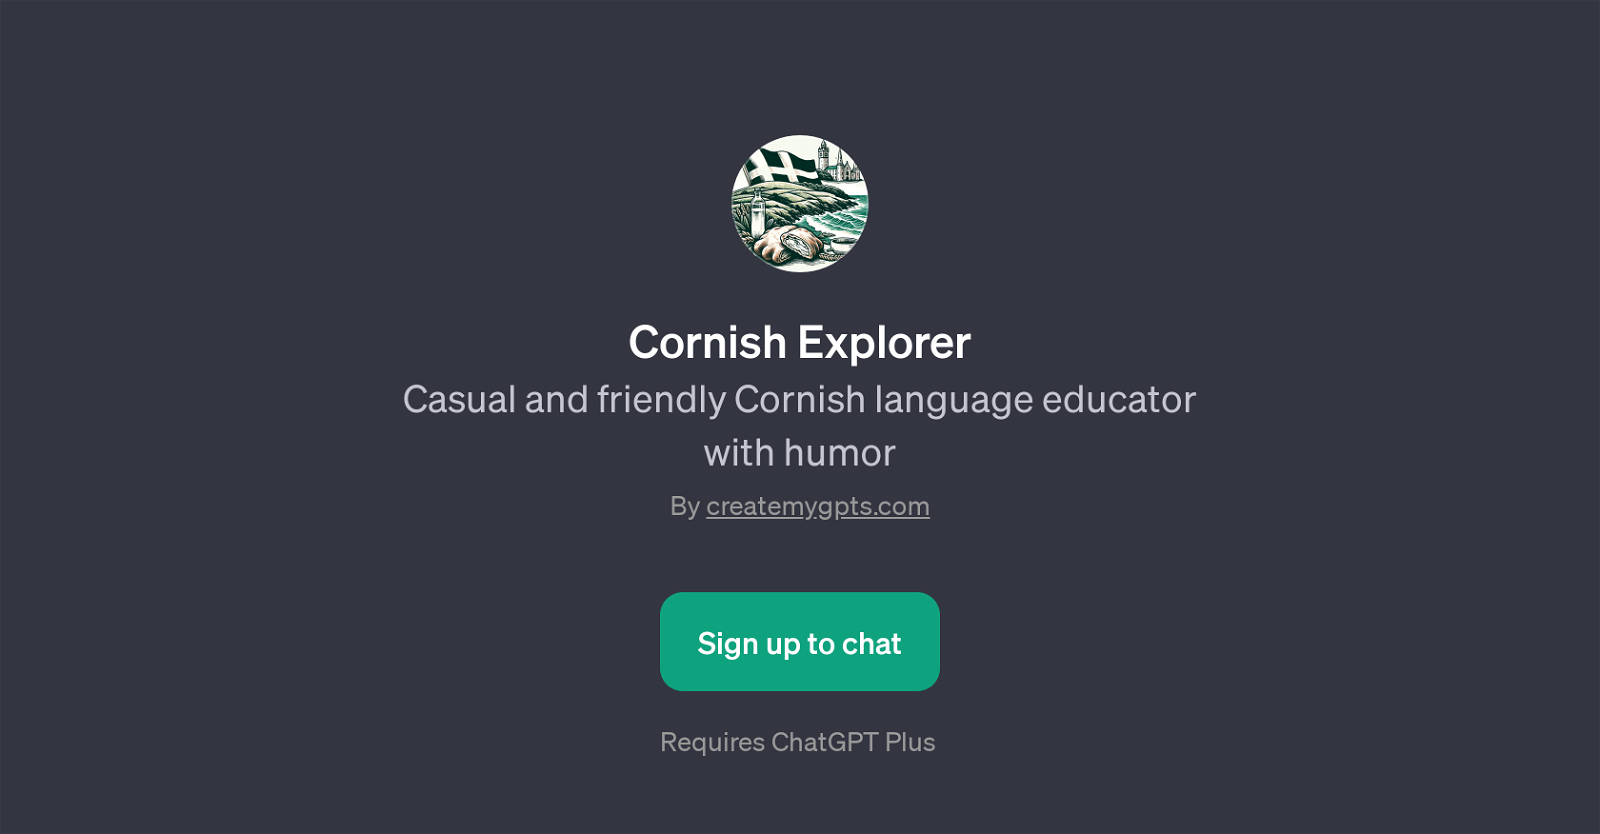 Cornish Explorer website